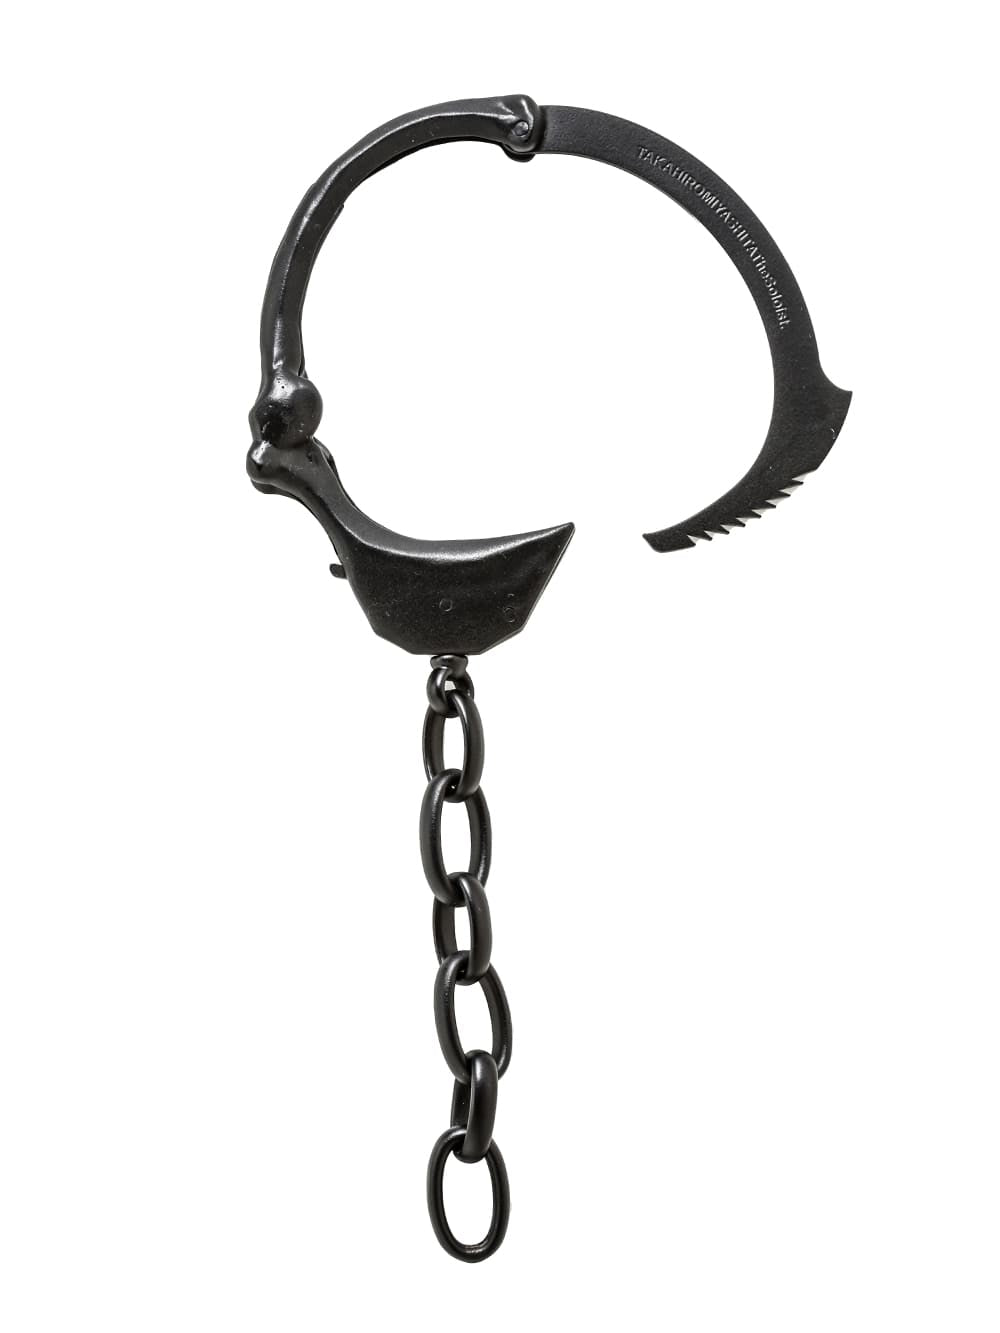 bone shaped handcuffs bracelet.-M-